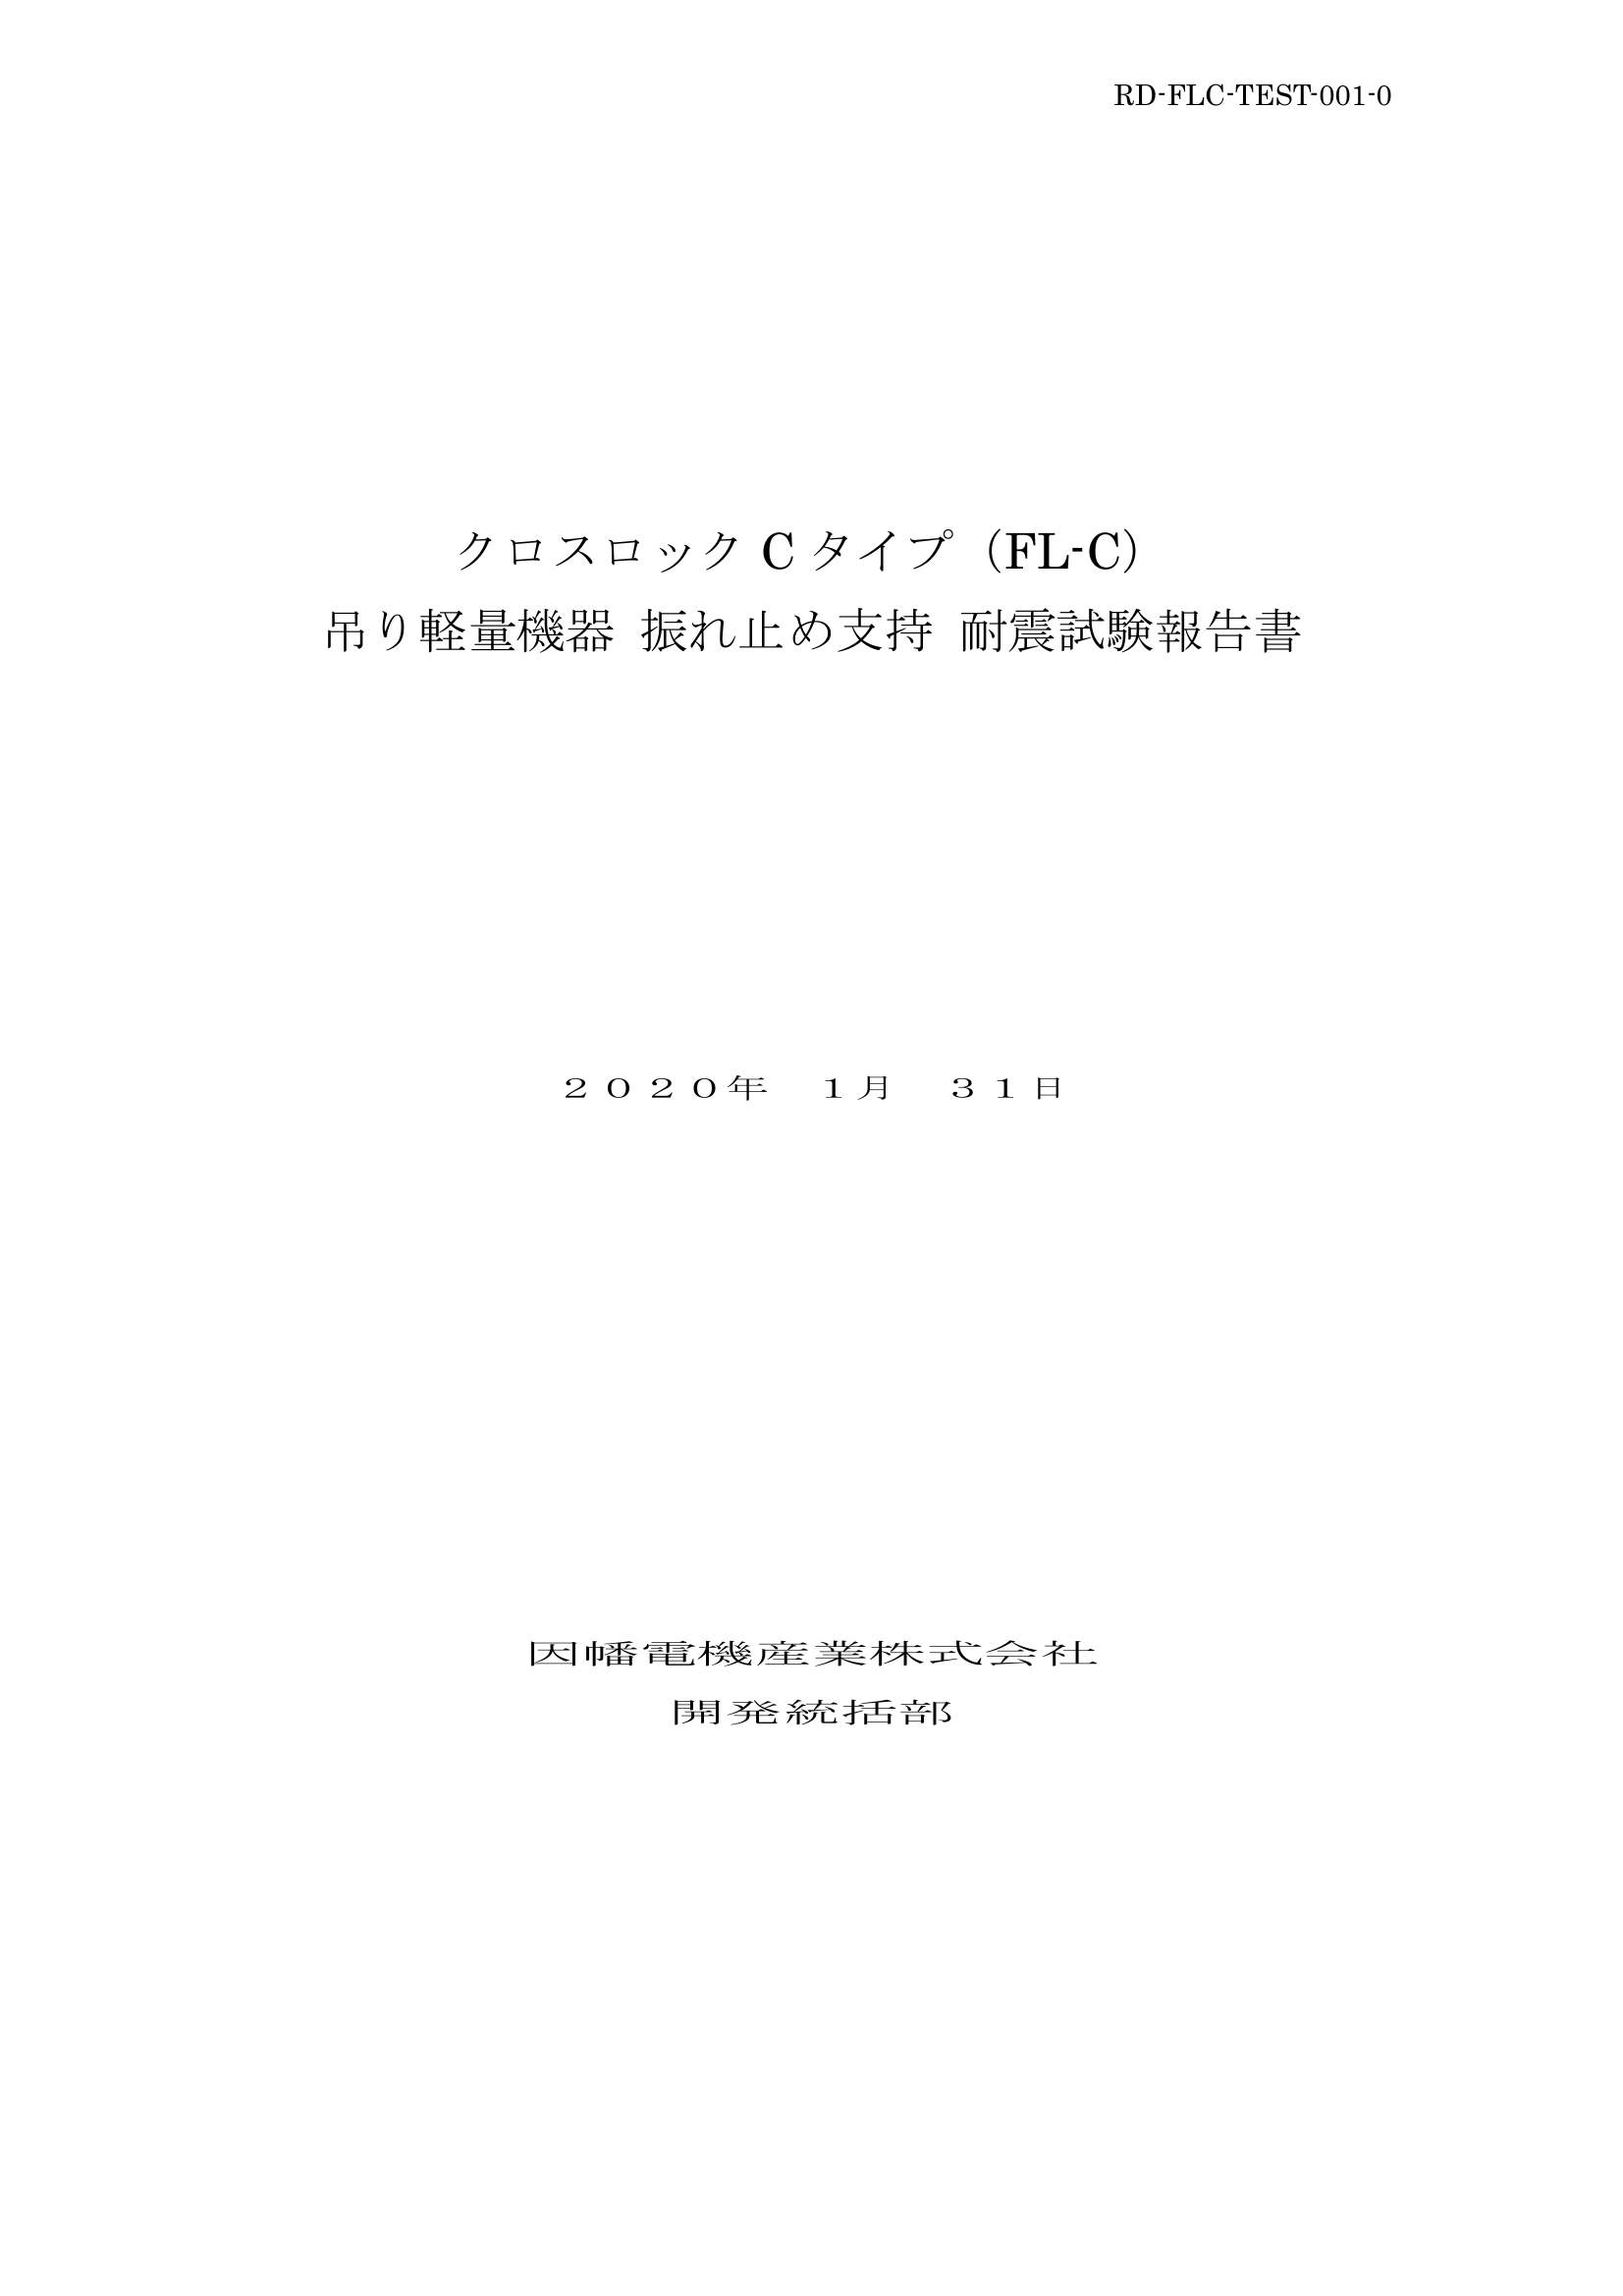 FL-C_軽量機器耐震試験報告書_20200131.pdf